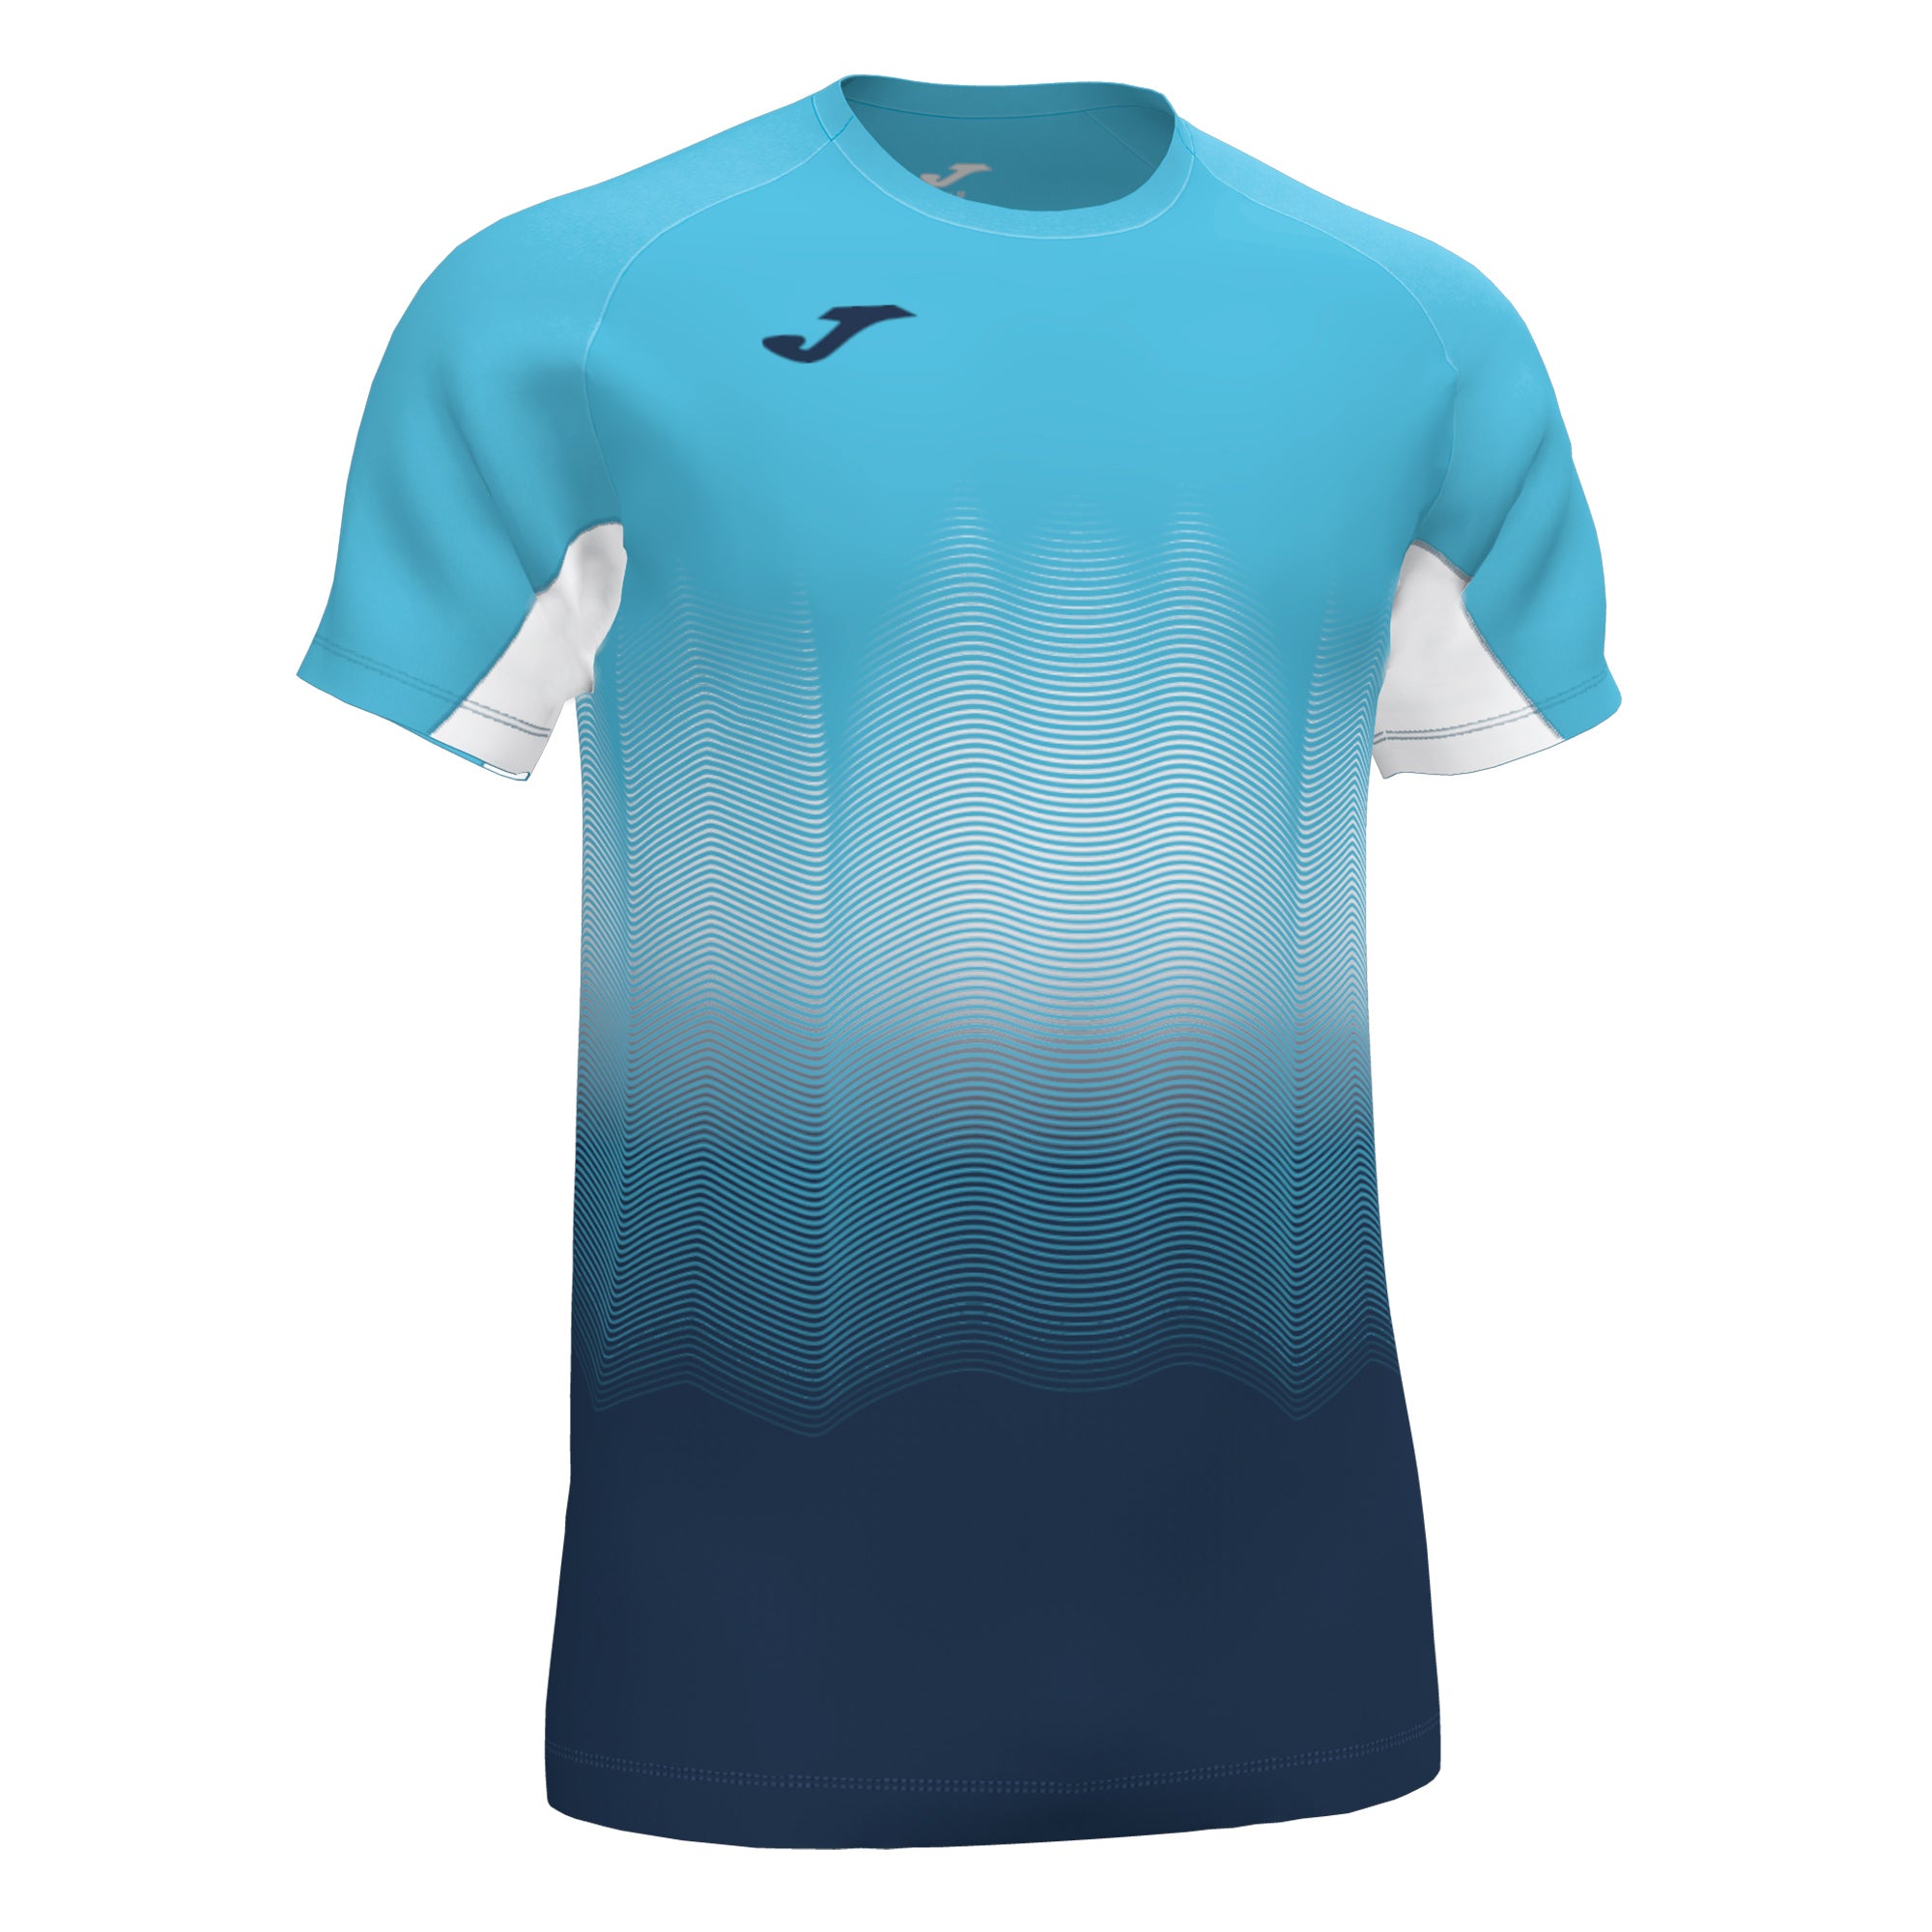 T-shirt Elite VII turchese-fluorescente-marino M/C